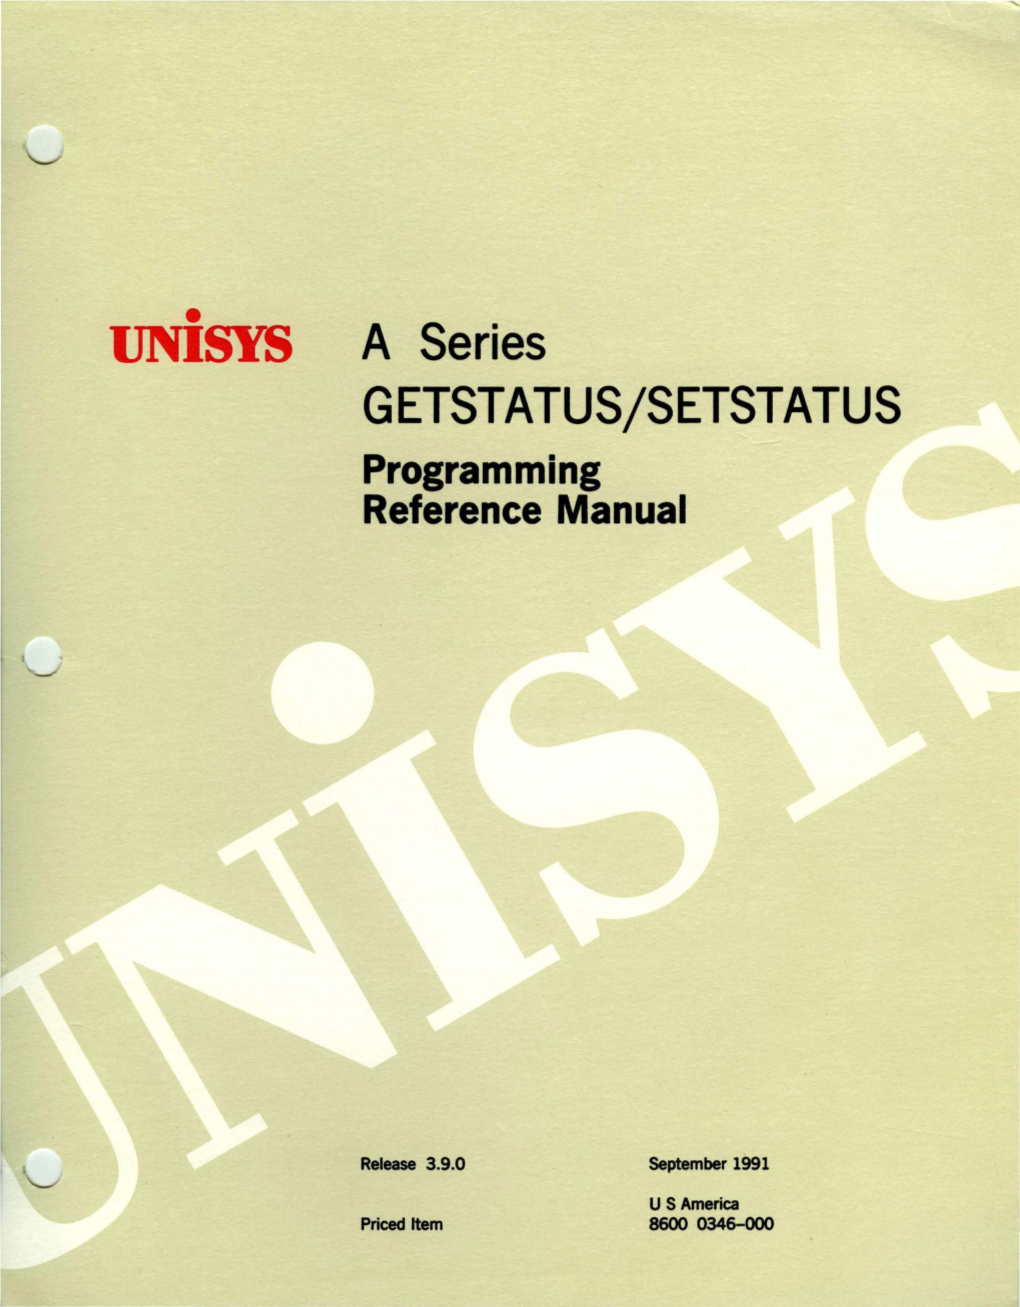 UNISYS a Series Getstatusjsetstatus Programming Reference Manual